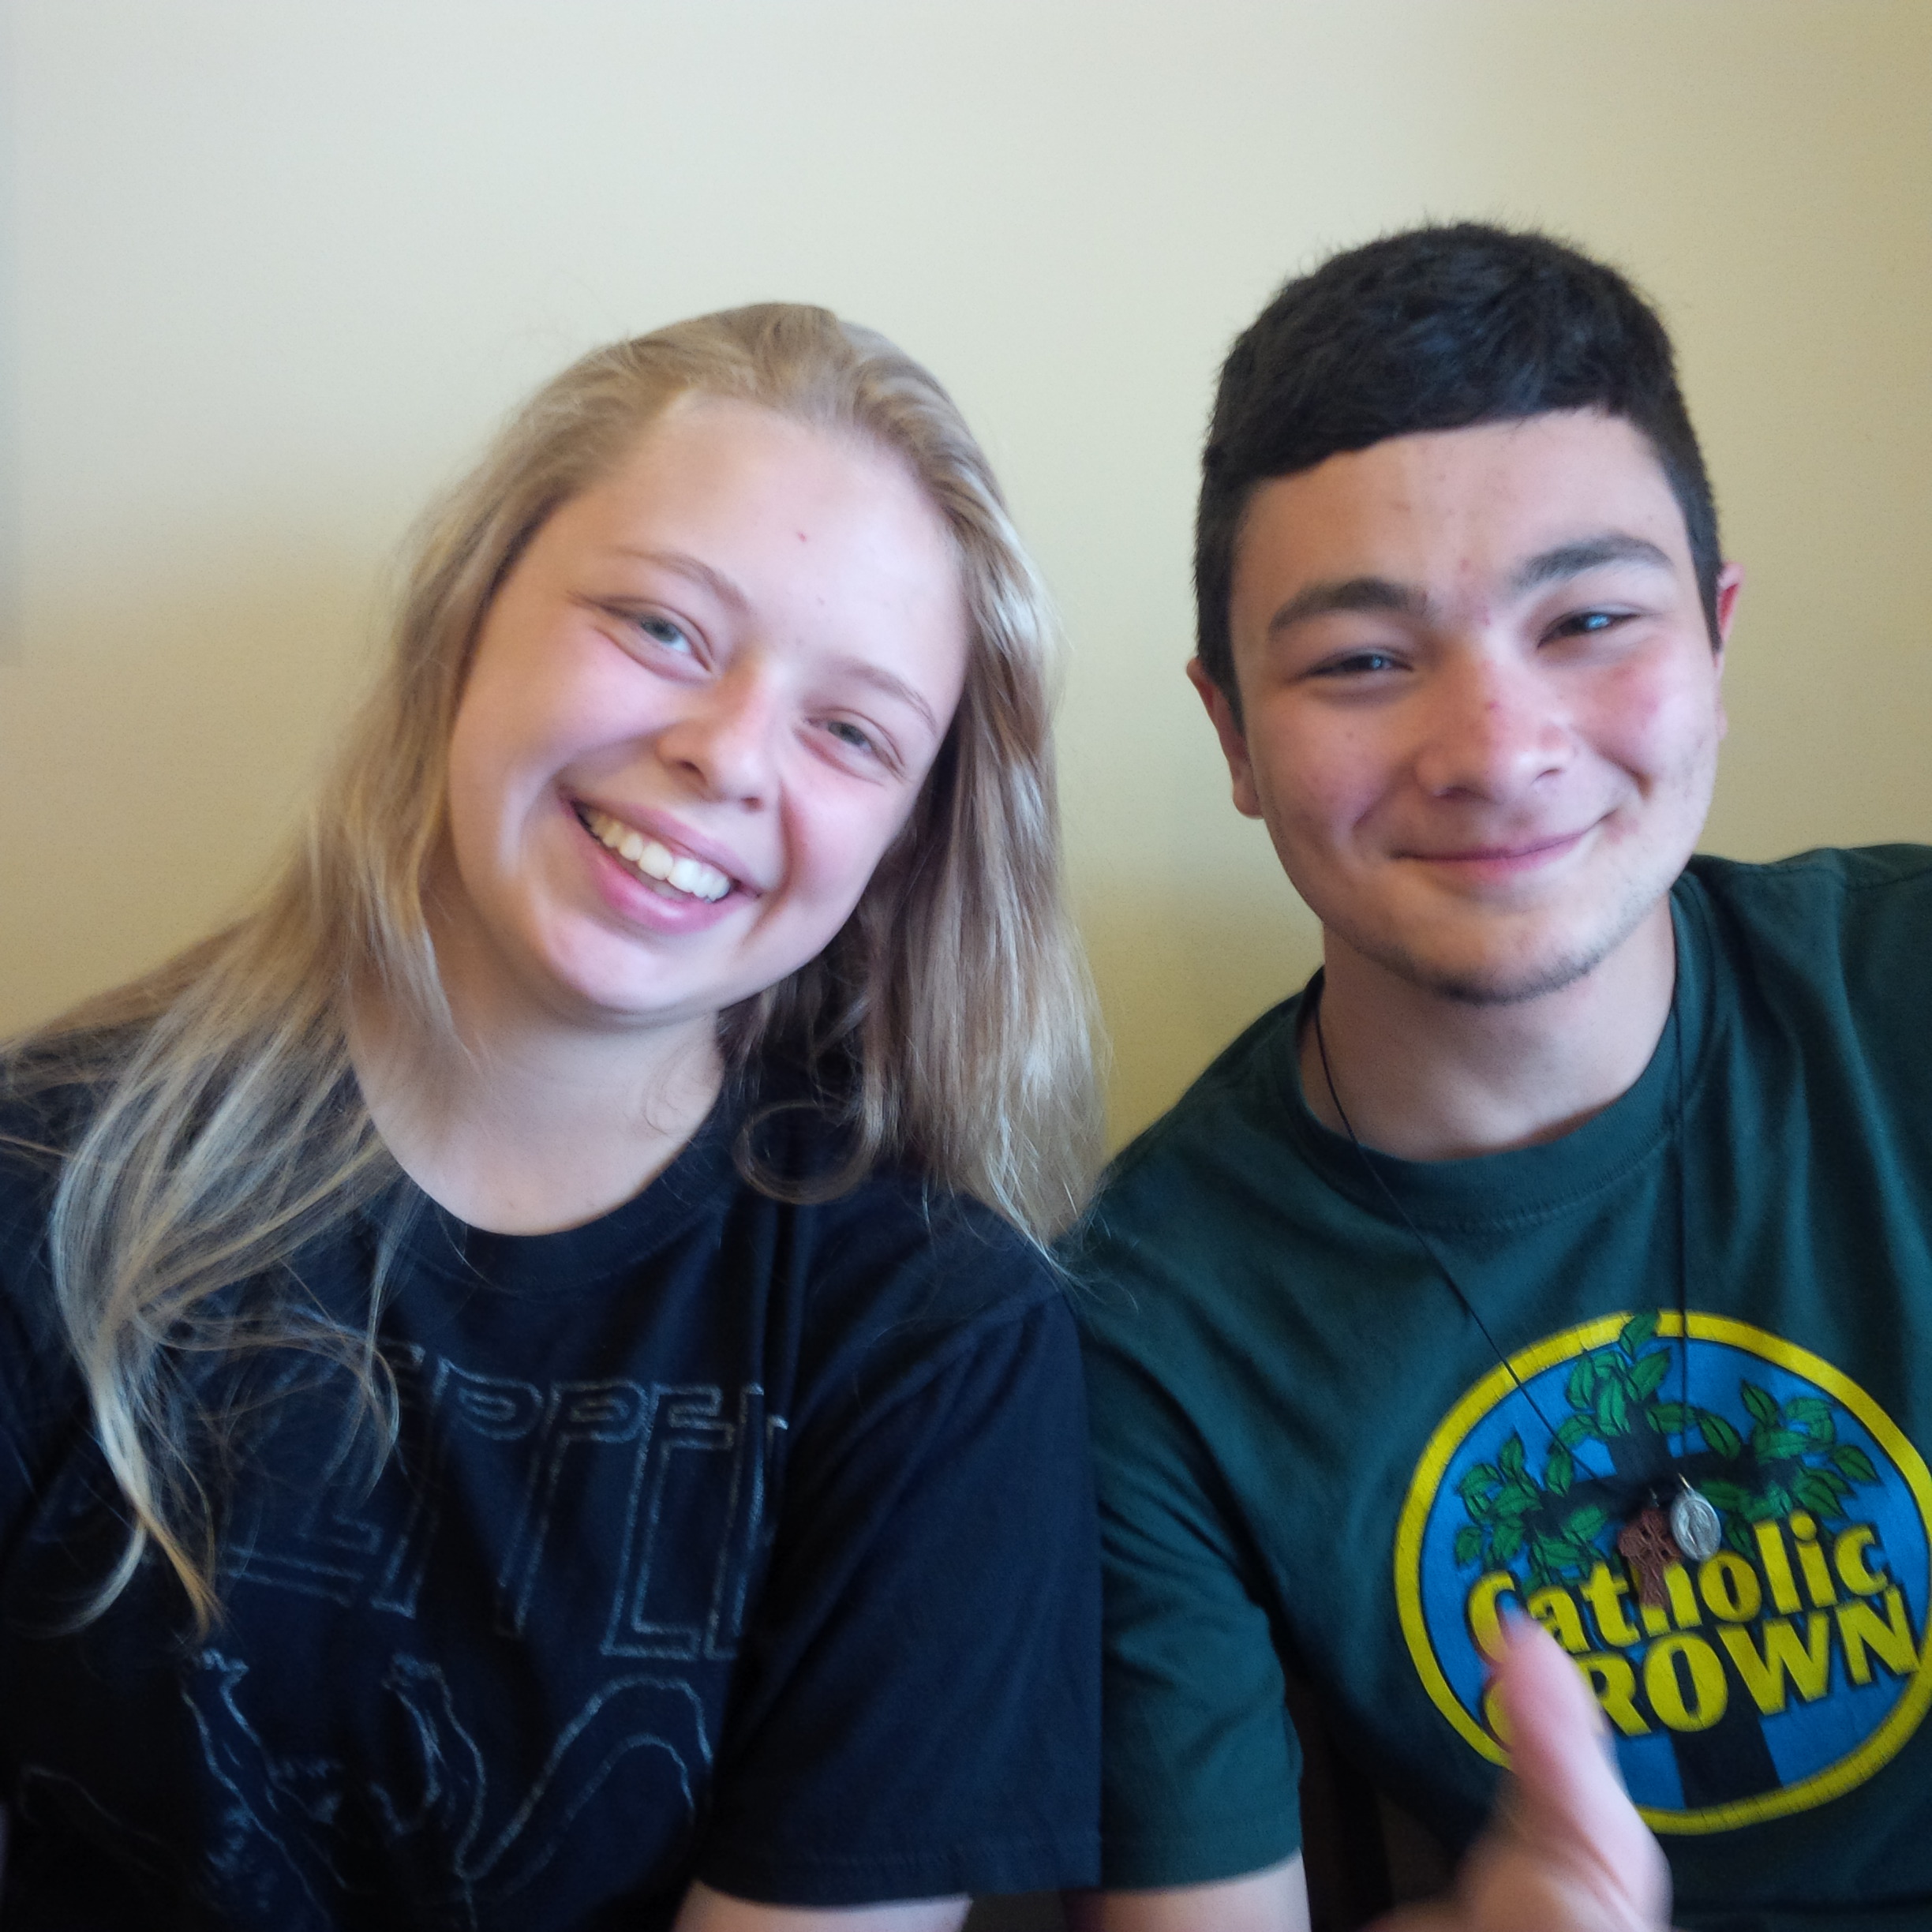 Marisa Ramos, 17, of Anchorage, Alaska, and Daniel Piscoya, 18, of Fairbanks